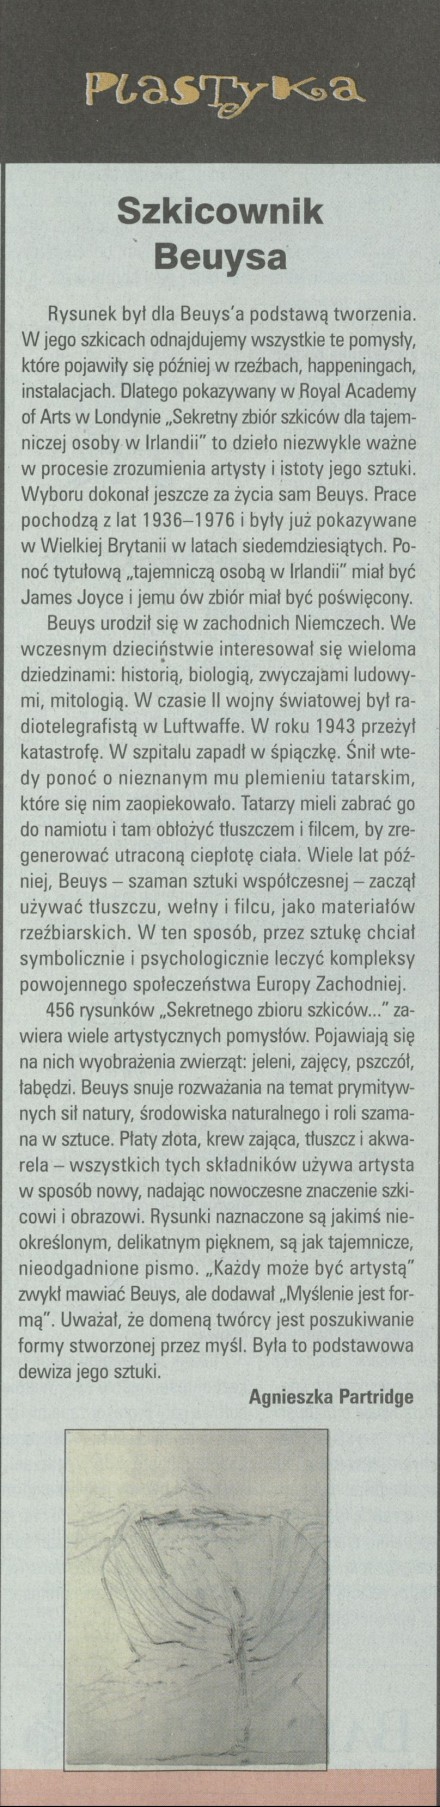 Szkicownik Beuysa